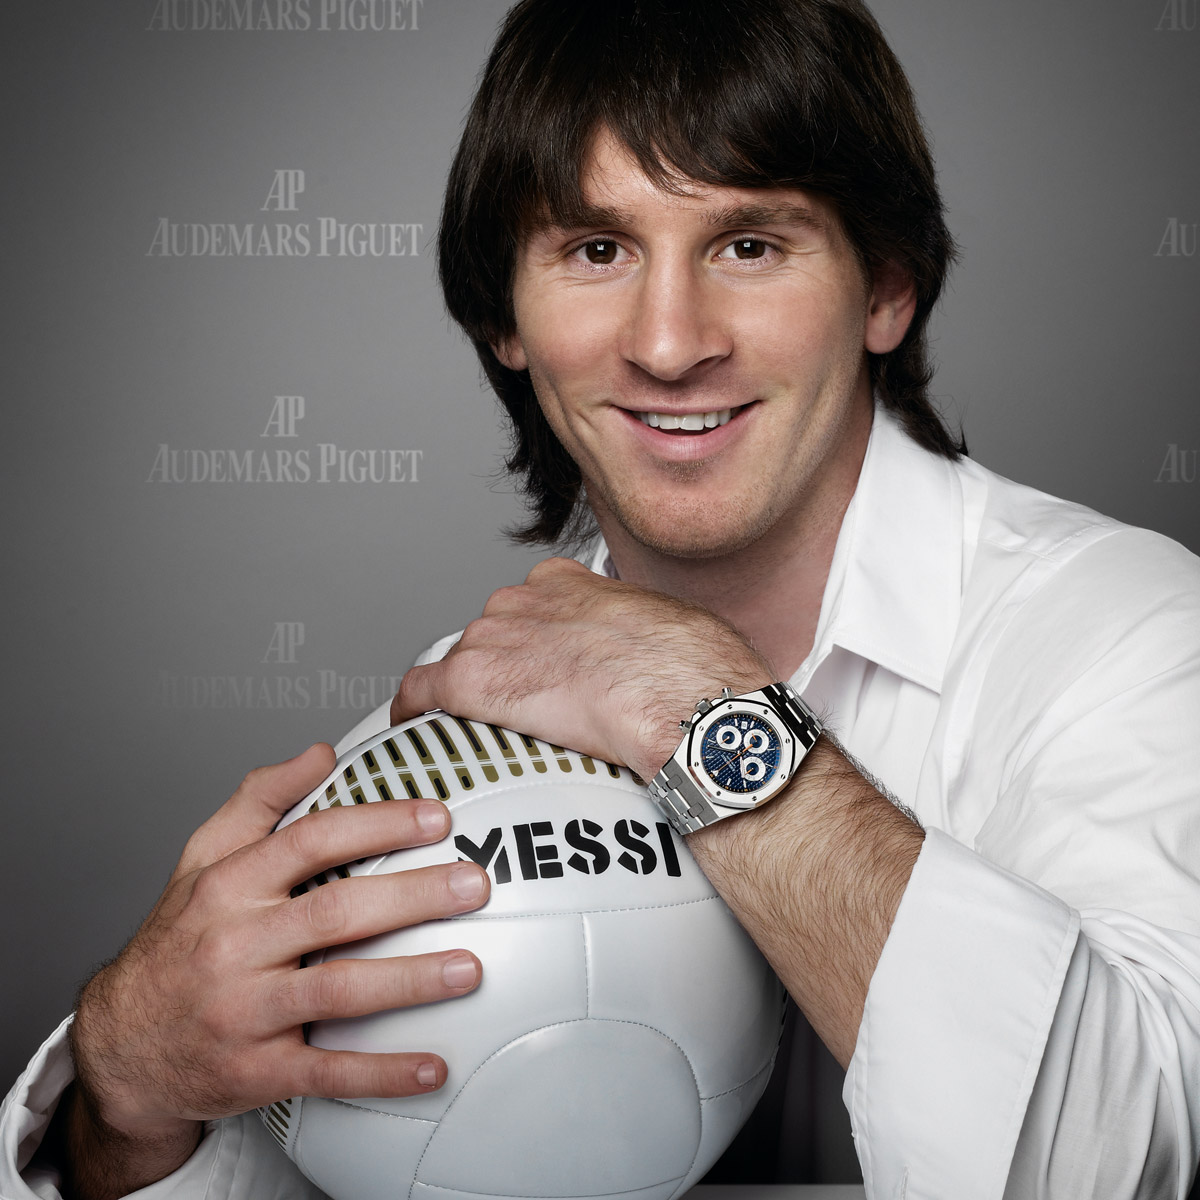 Lionel Messi montres de luxe star